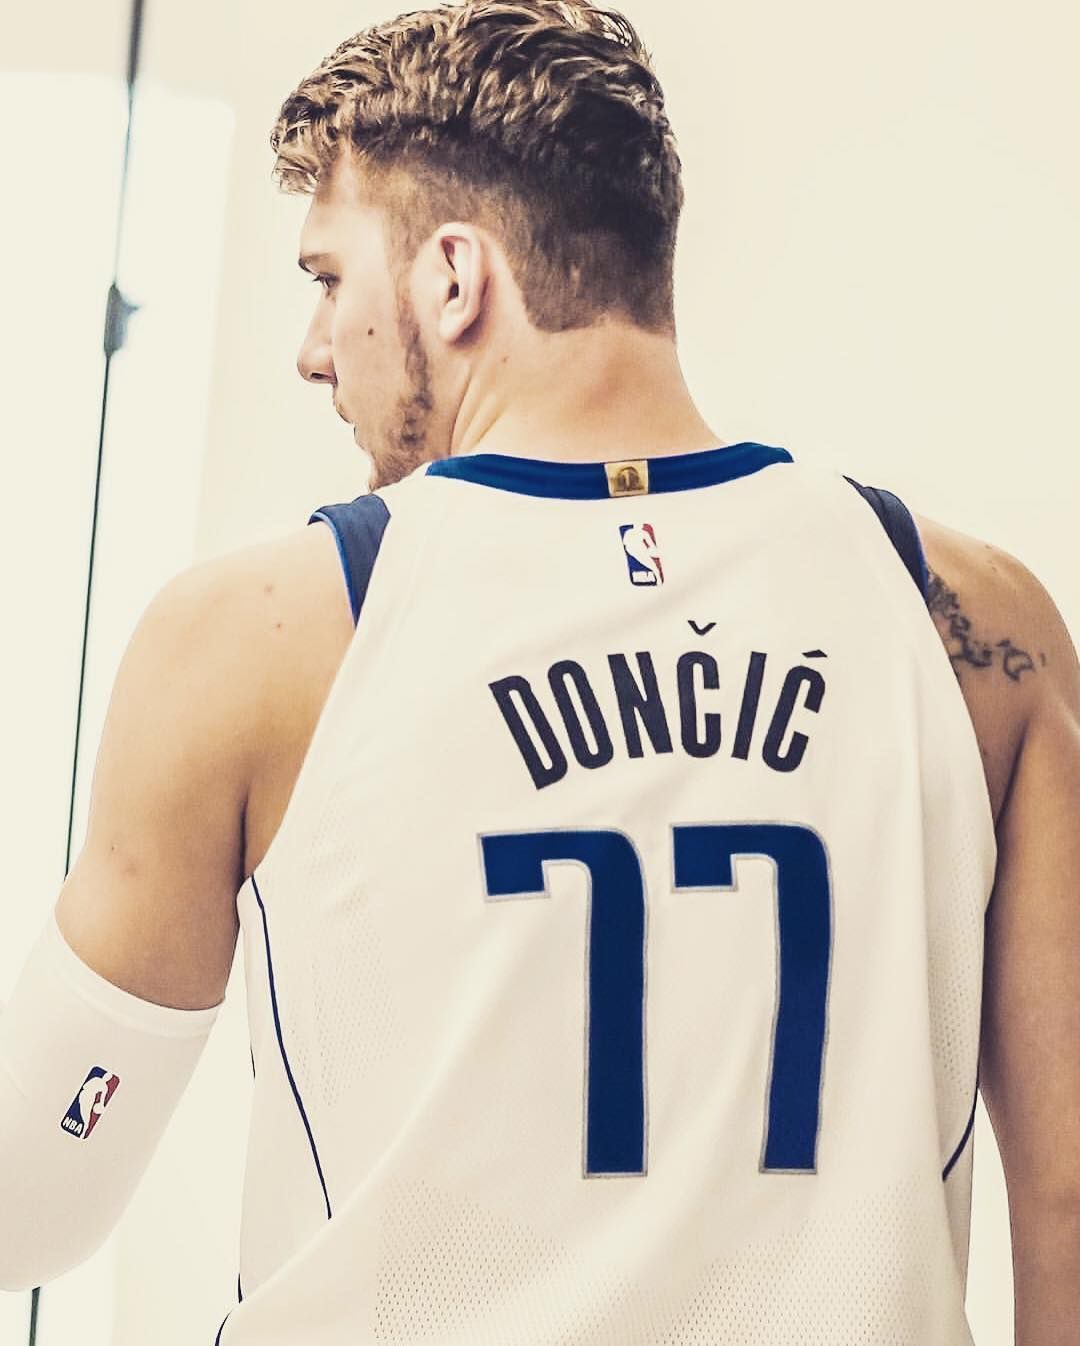 Luka Doncic Dallas Mavericks 2019 2560×1440 Wallpaper